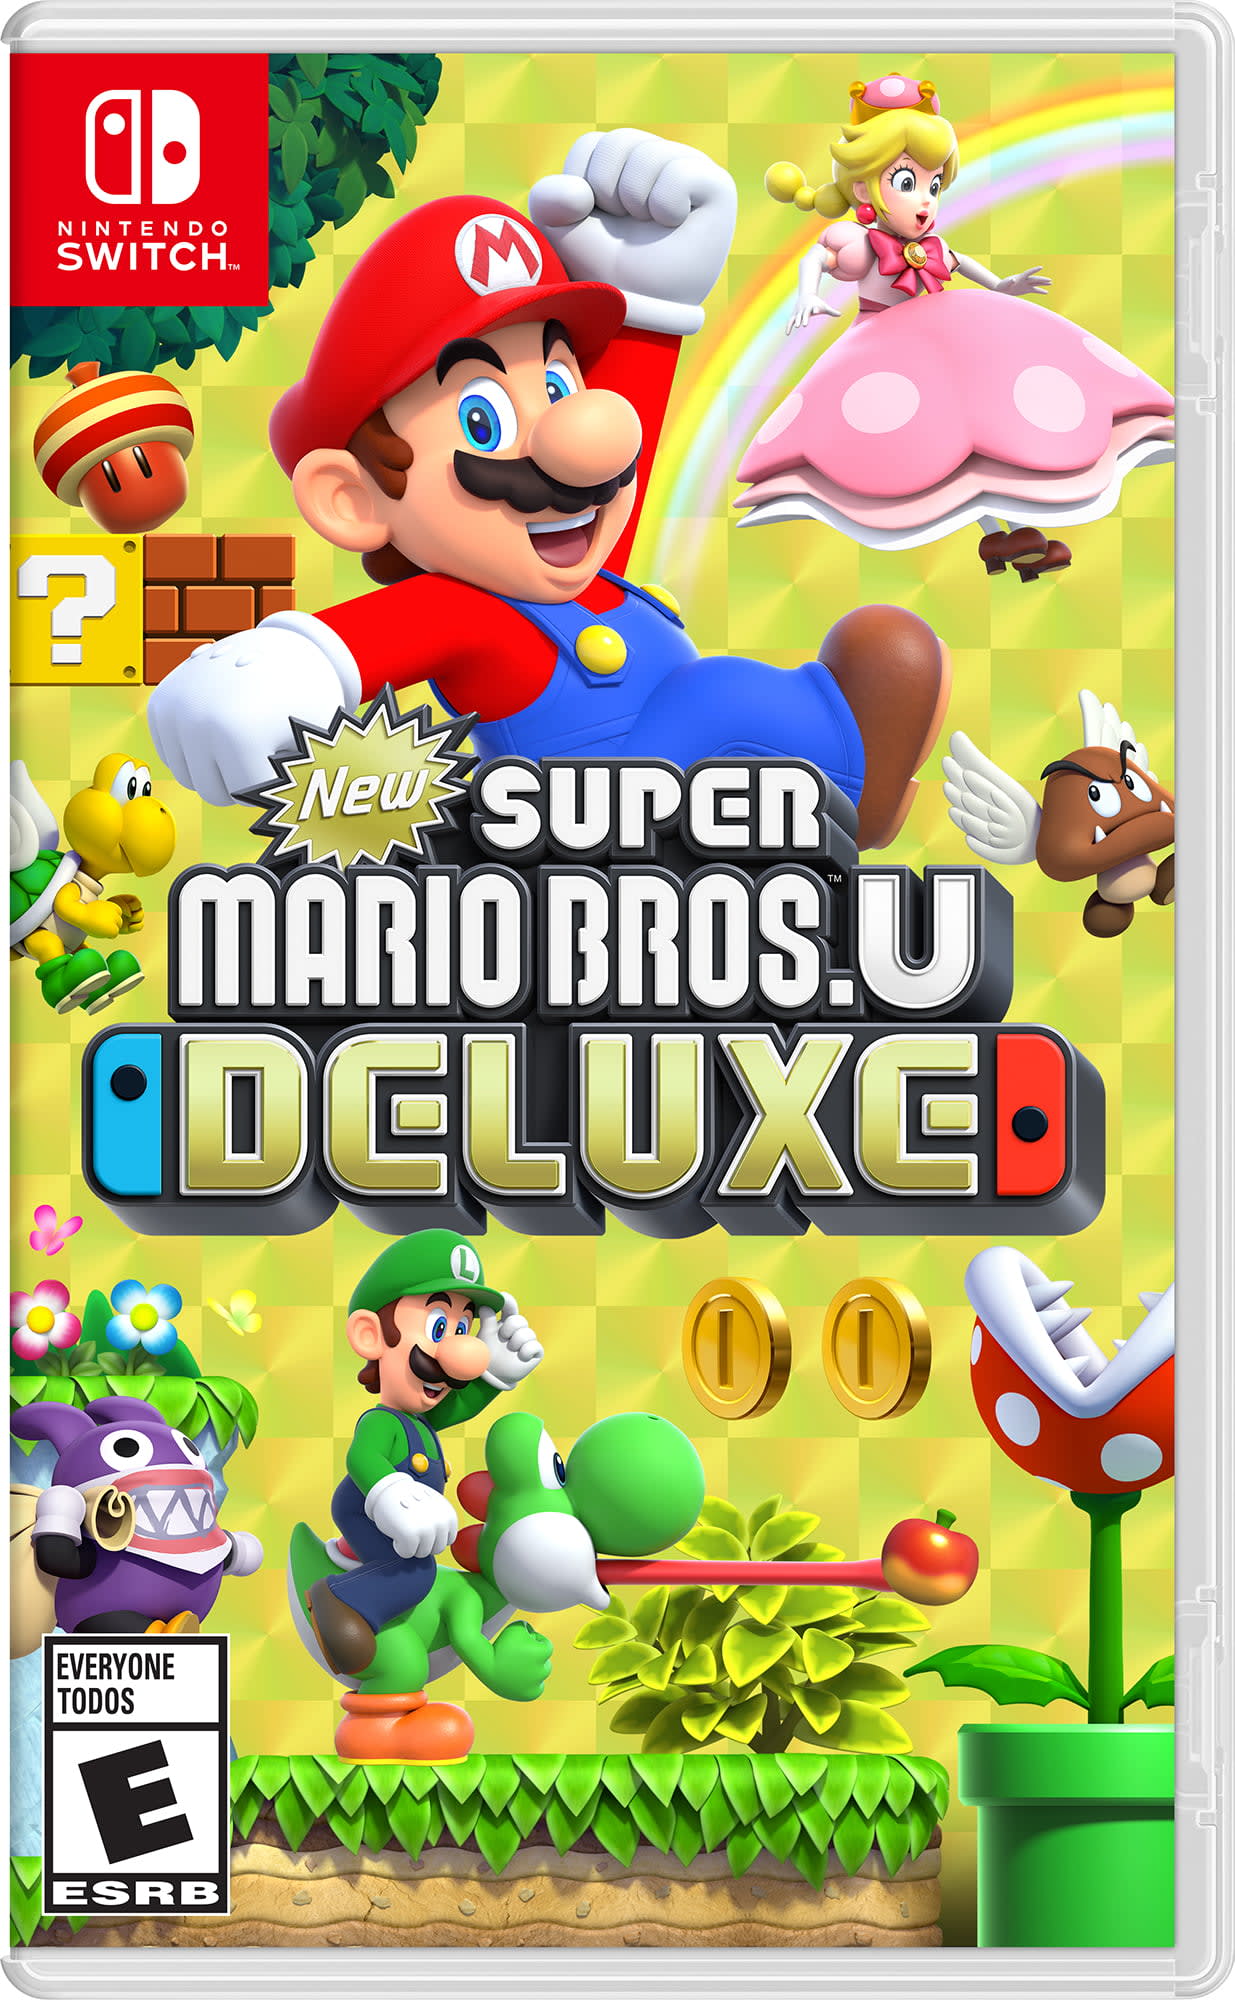 Super Mario Party - Nintendo Switch - DroneUp Delivery